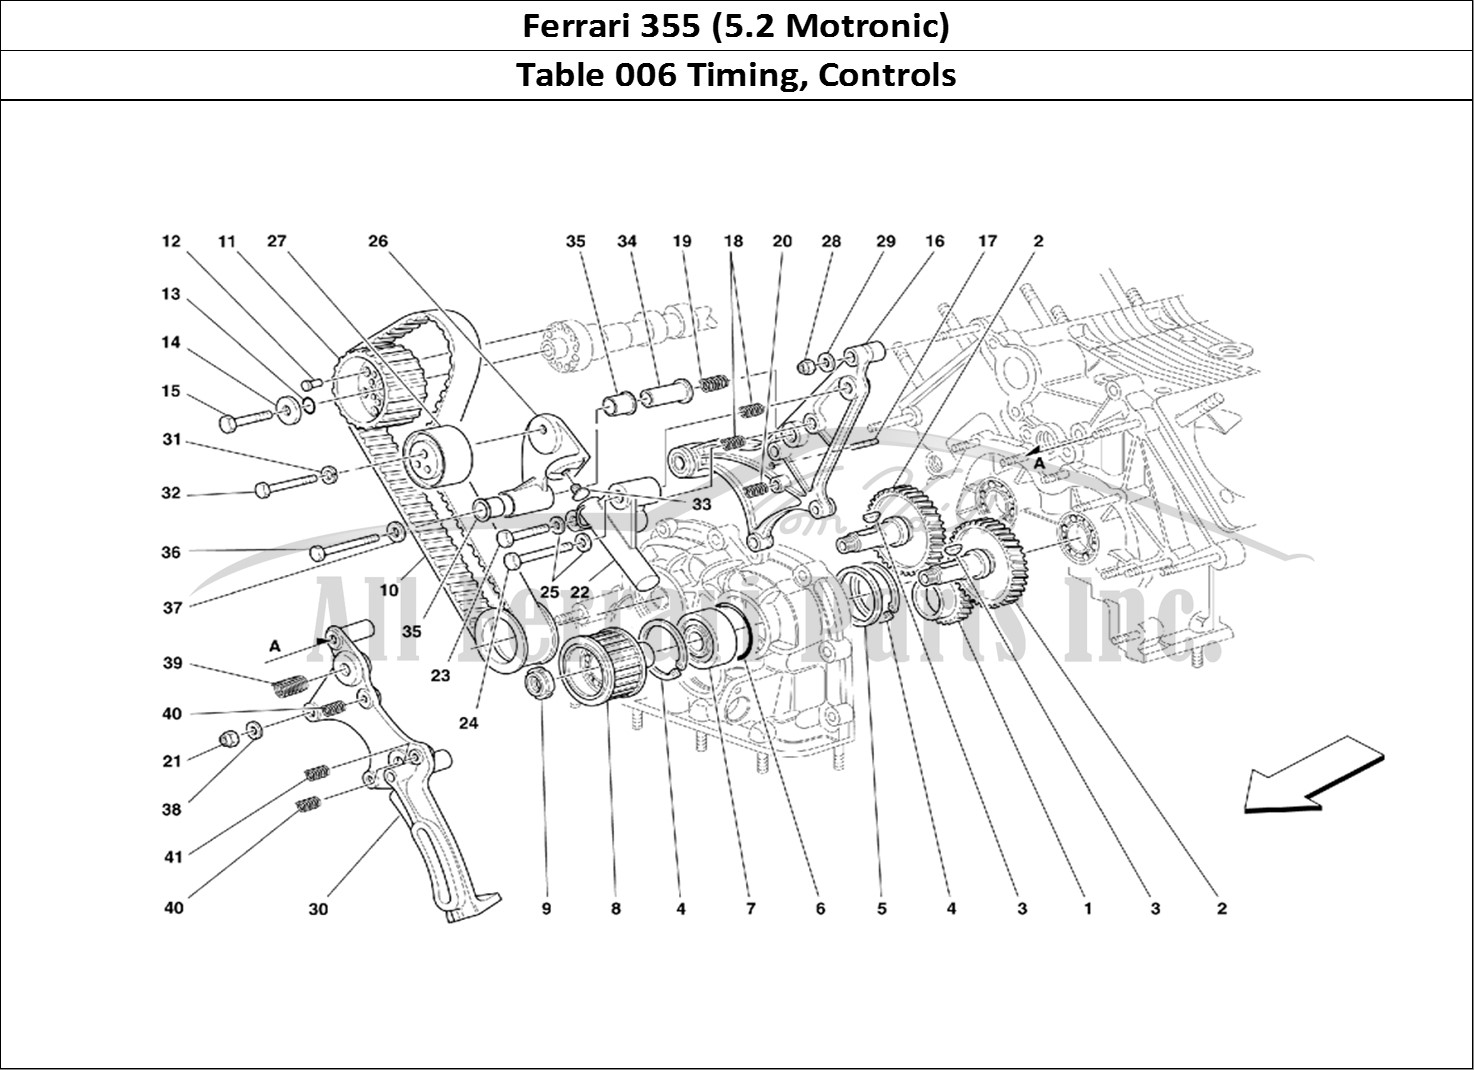 Ferrari Parts Ferrari 355 (5.2 Motronic) Page 006 Timing - Controls